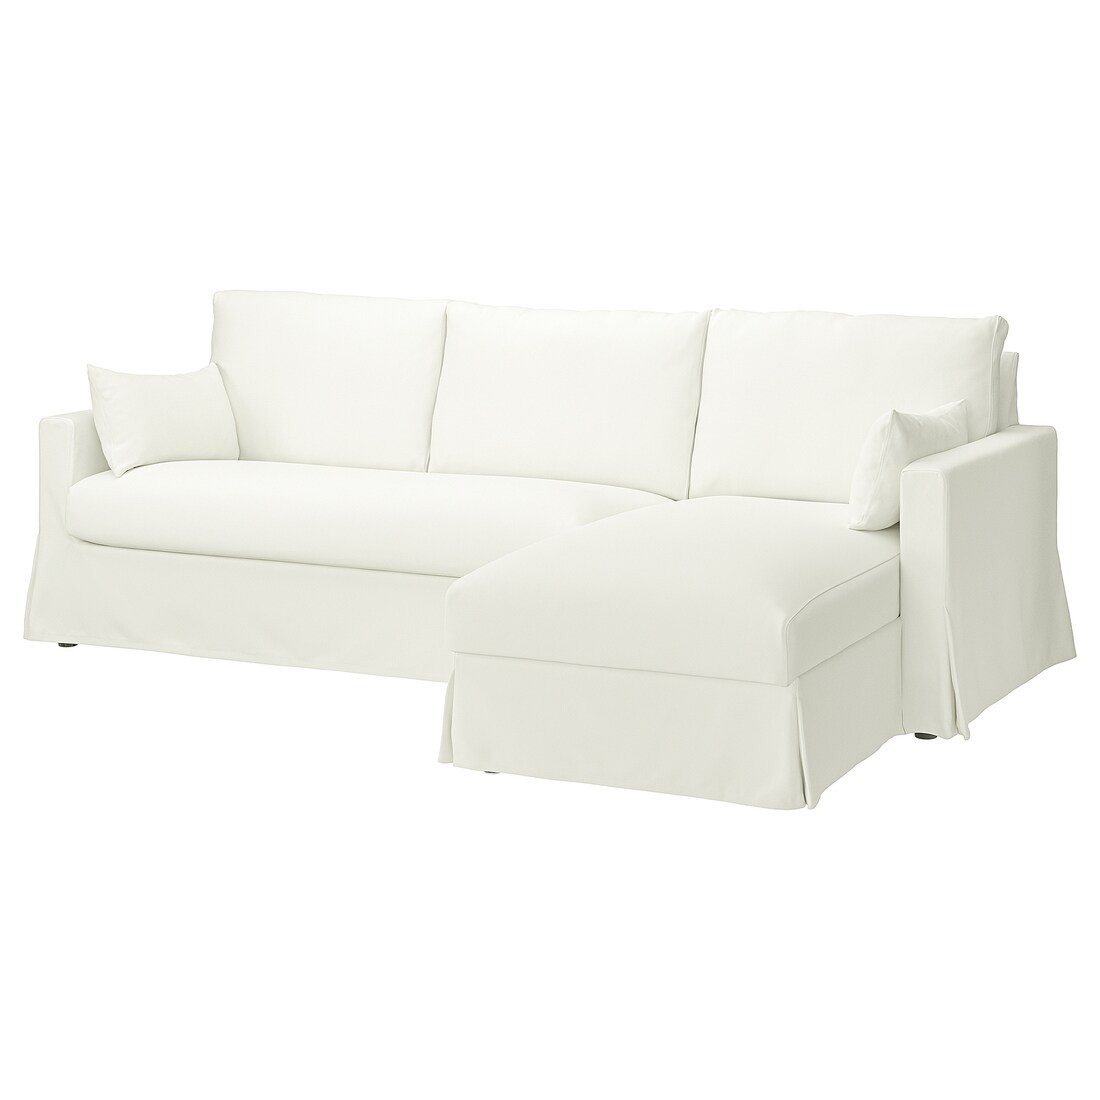 HYLTARP 3-х местный диван с козеткой, правосторонний, Халларп белый